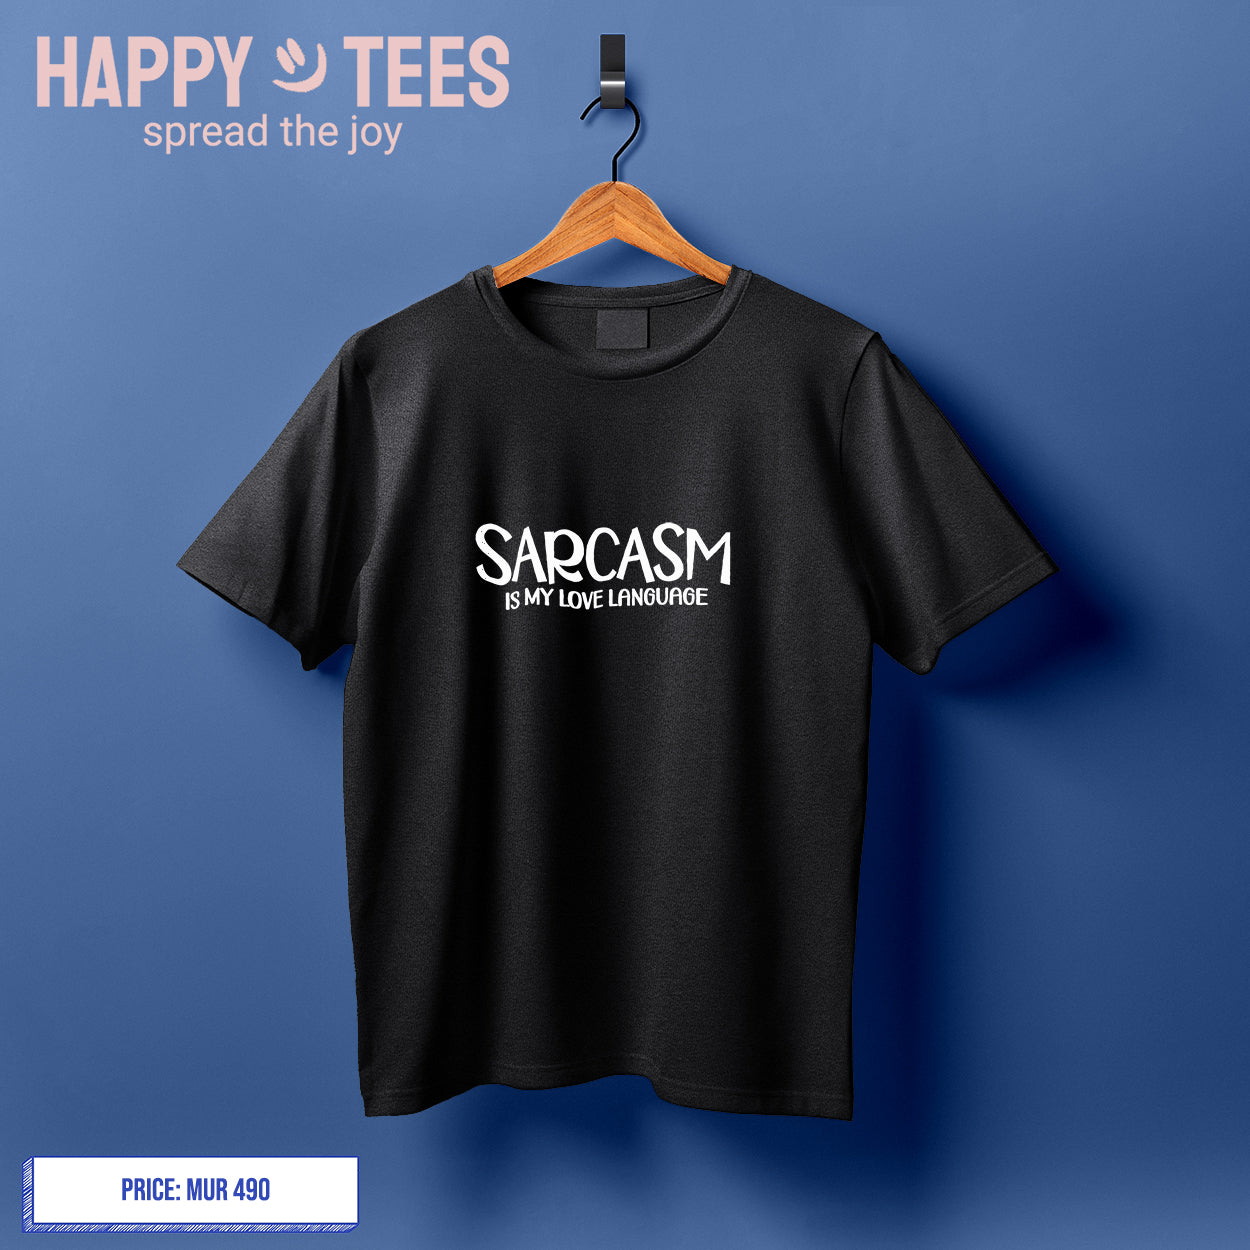 SARCASTIC - Sarcasm is my love language